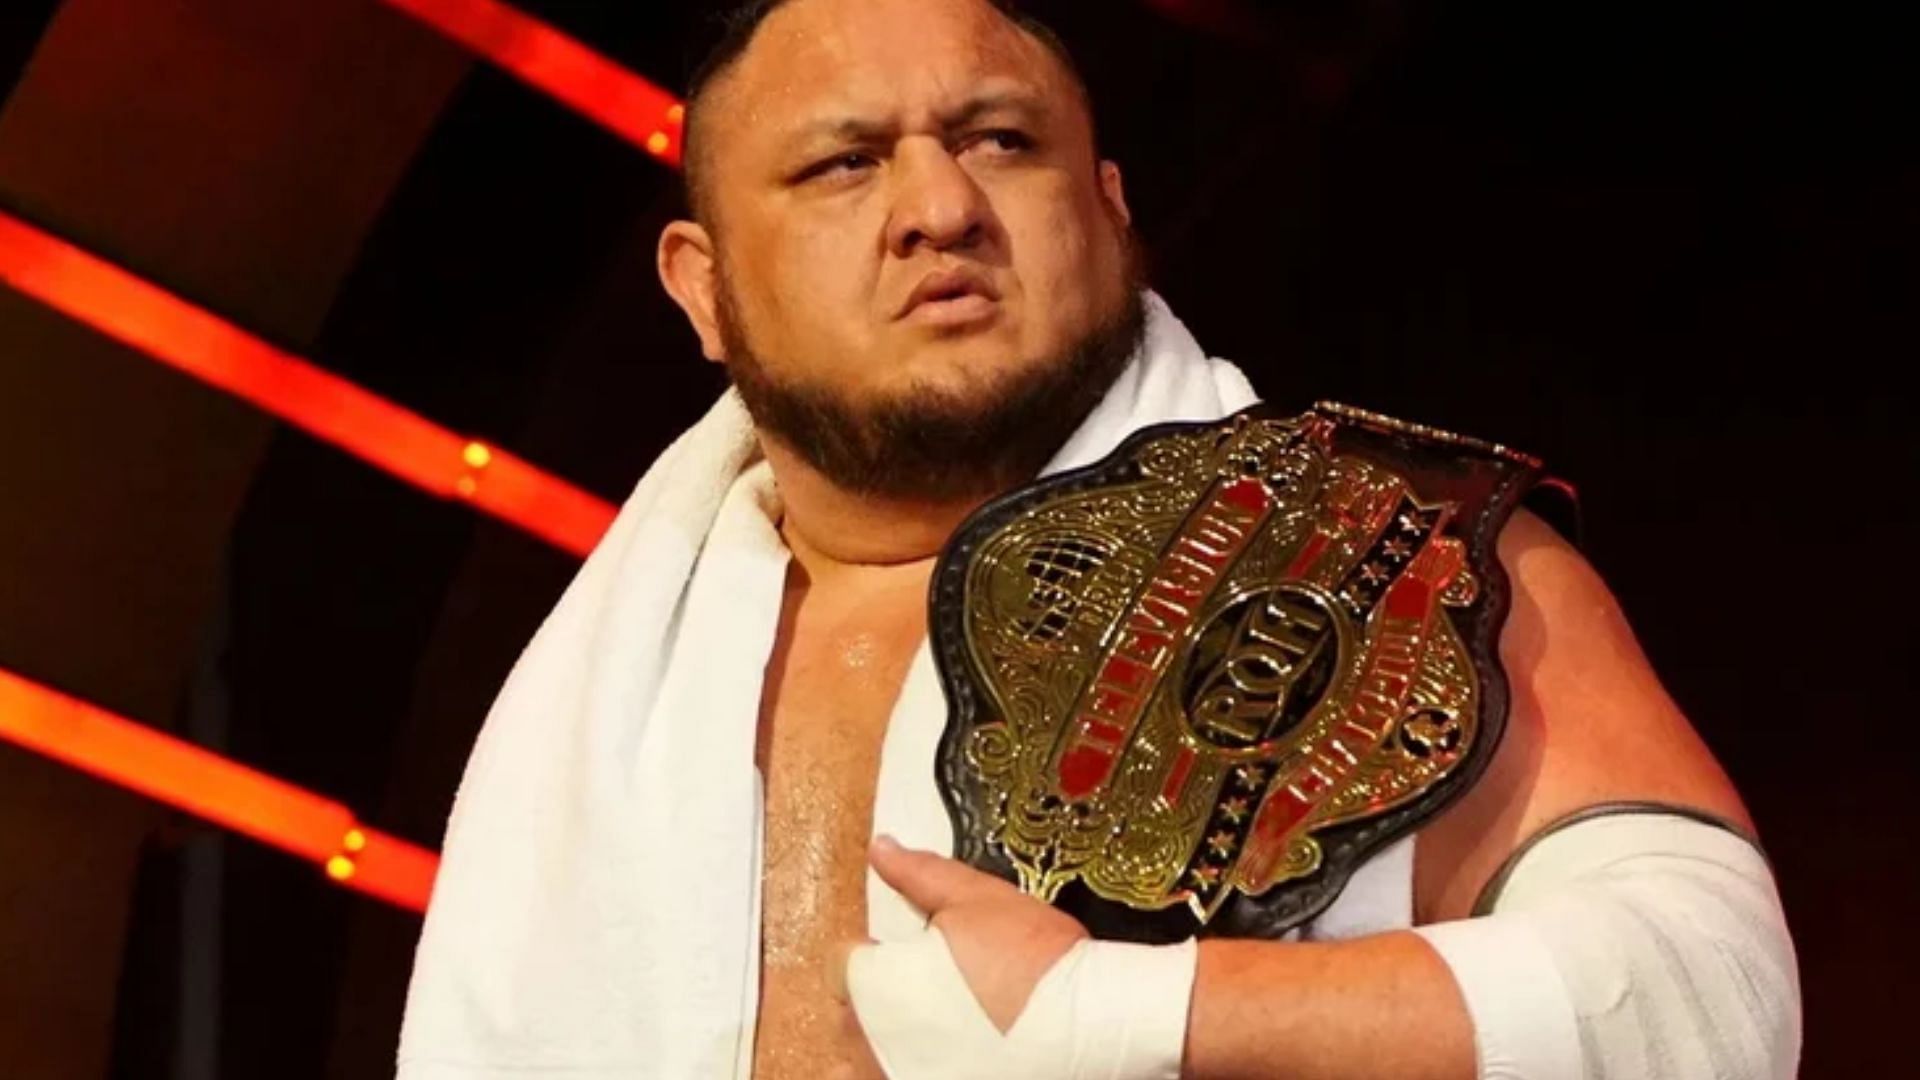 Samoa joe is a former WWE United States Champion